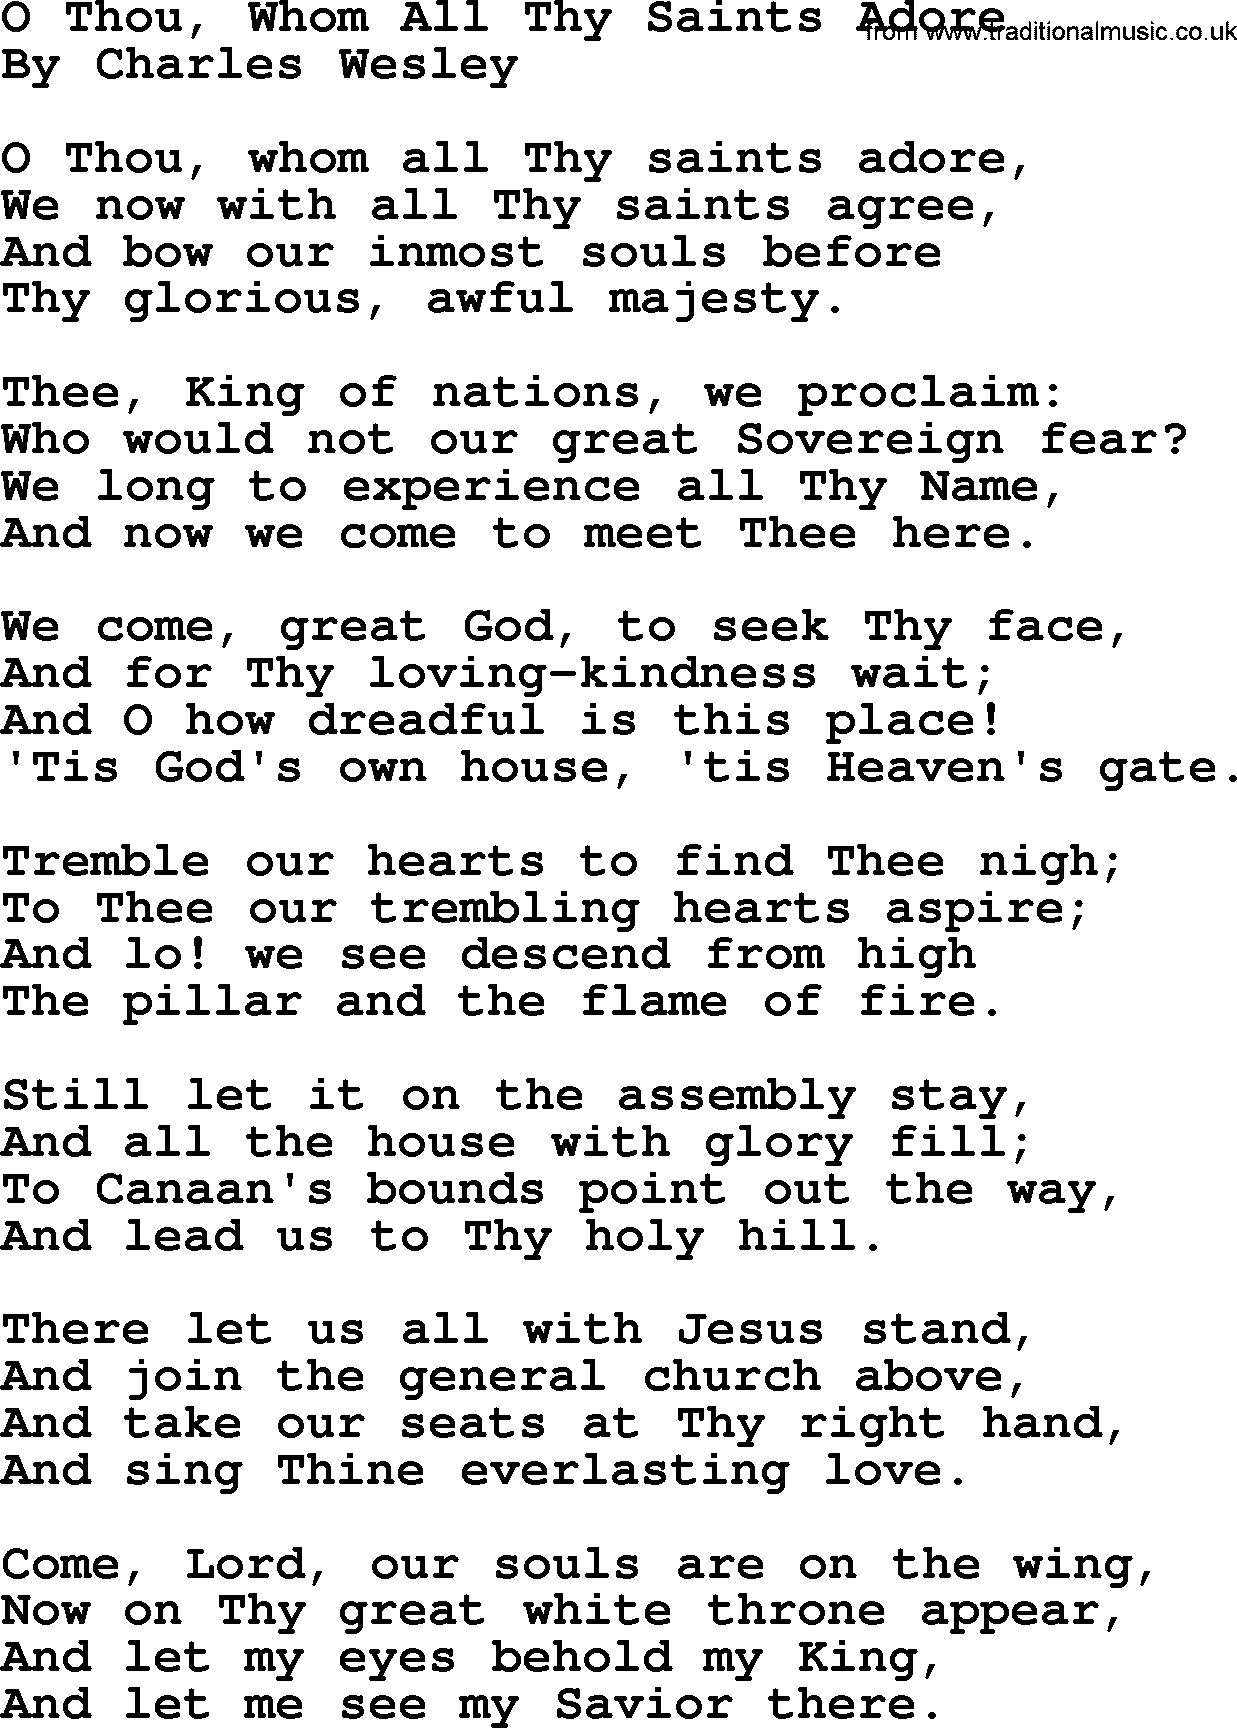 Charles Wesley hymn: O Thou, Whom All Thy Saints Adore, lyrics